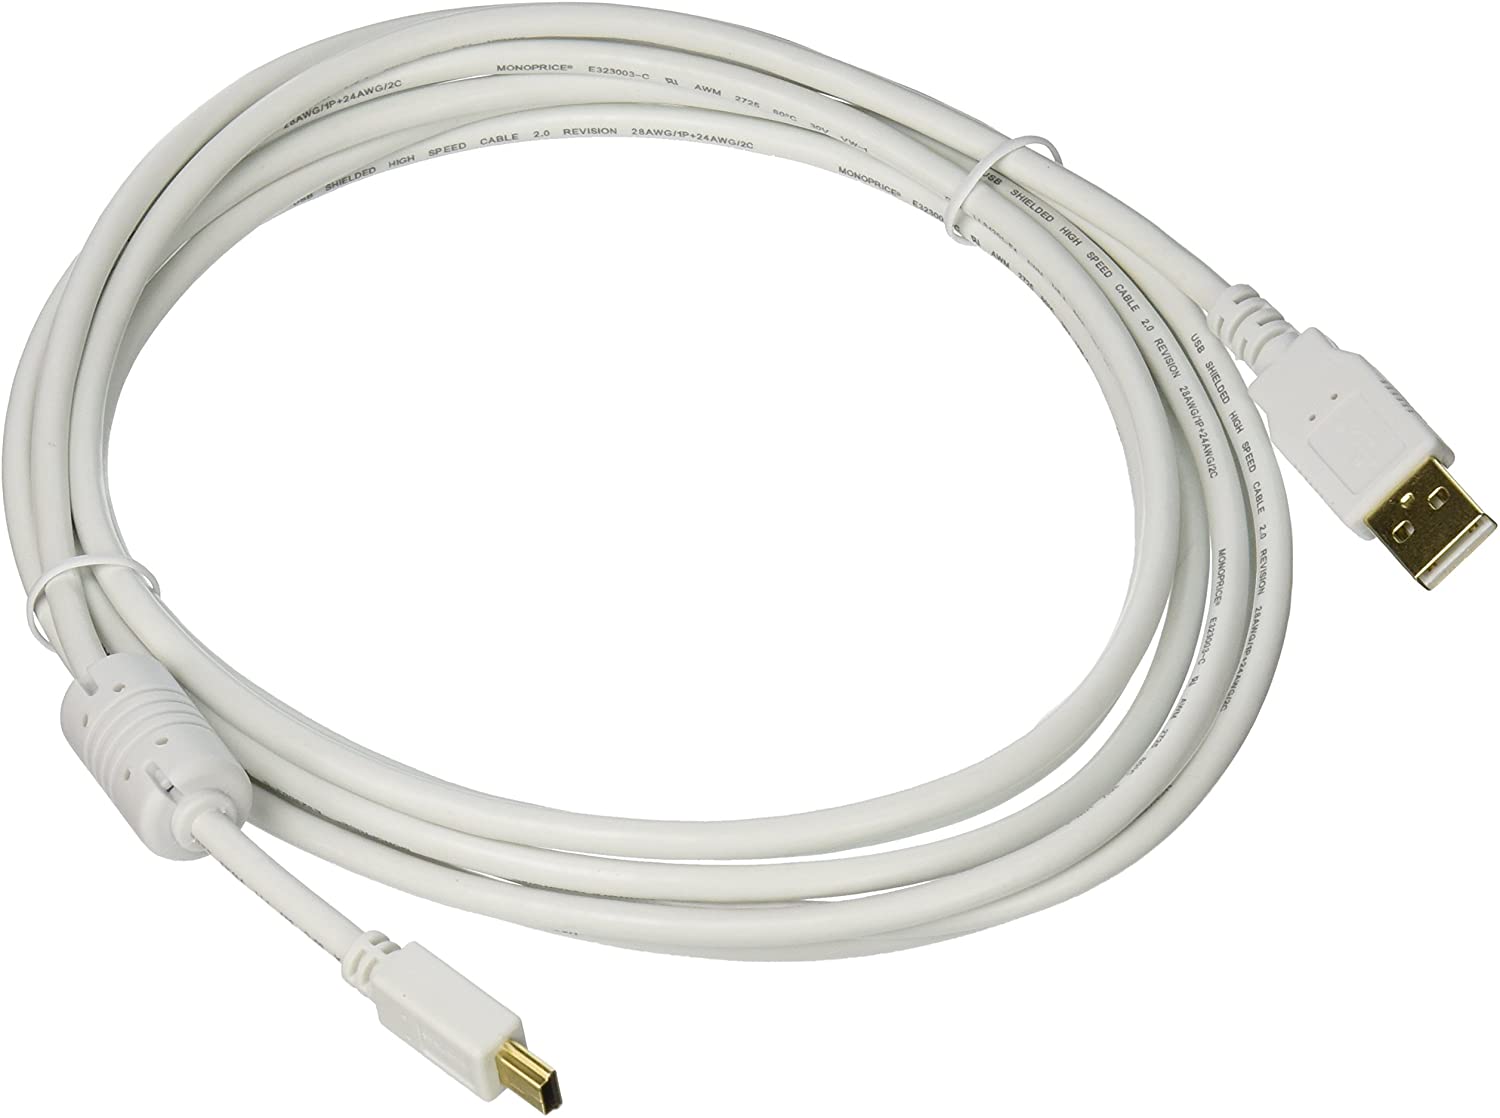 Monoprice 10-Feet USB Mini-B Cable $0.89 shipped w/ Prime